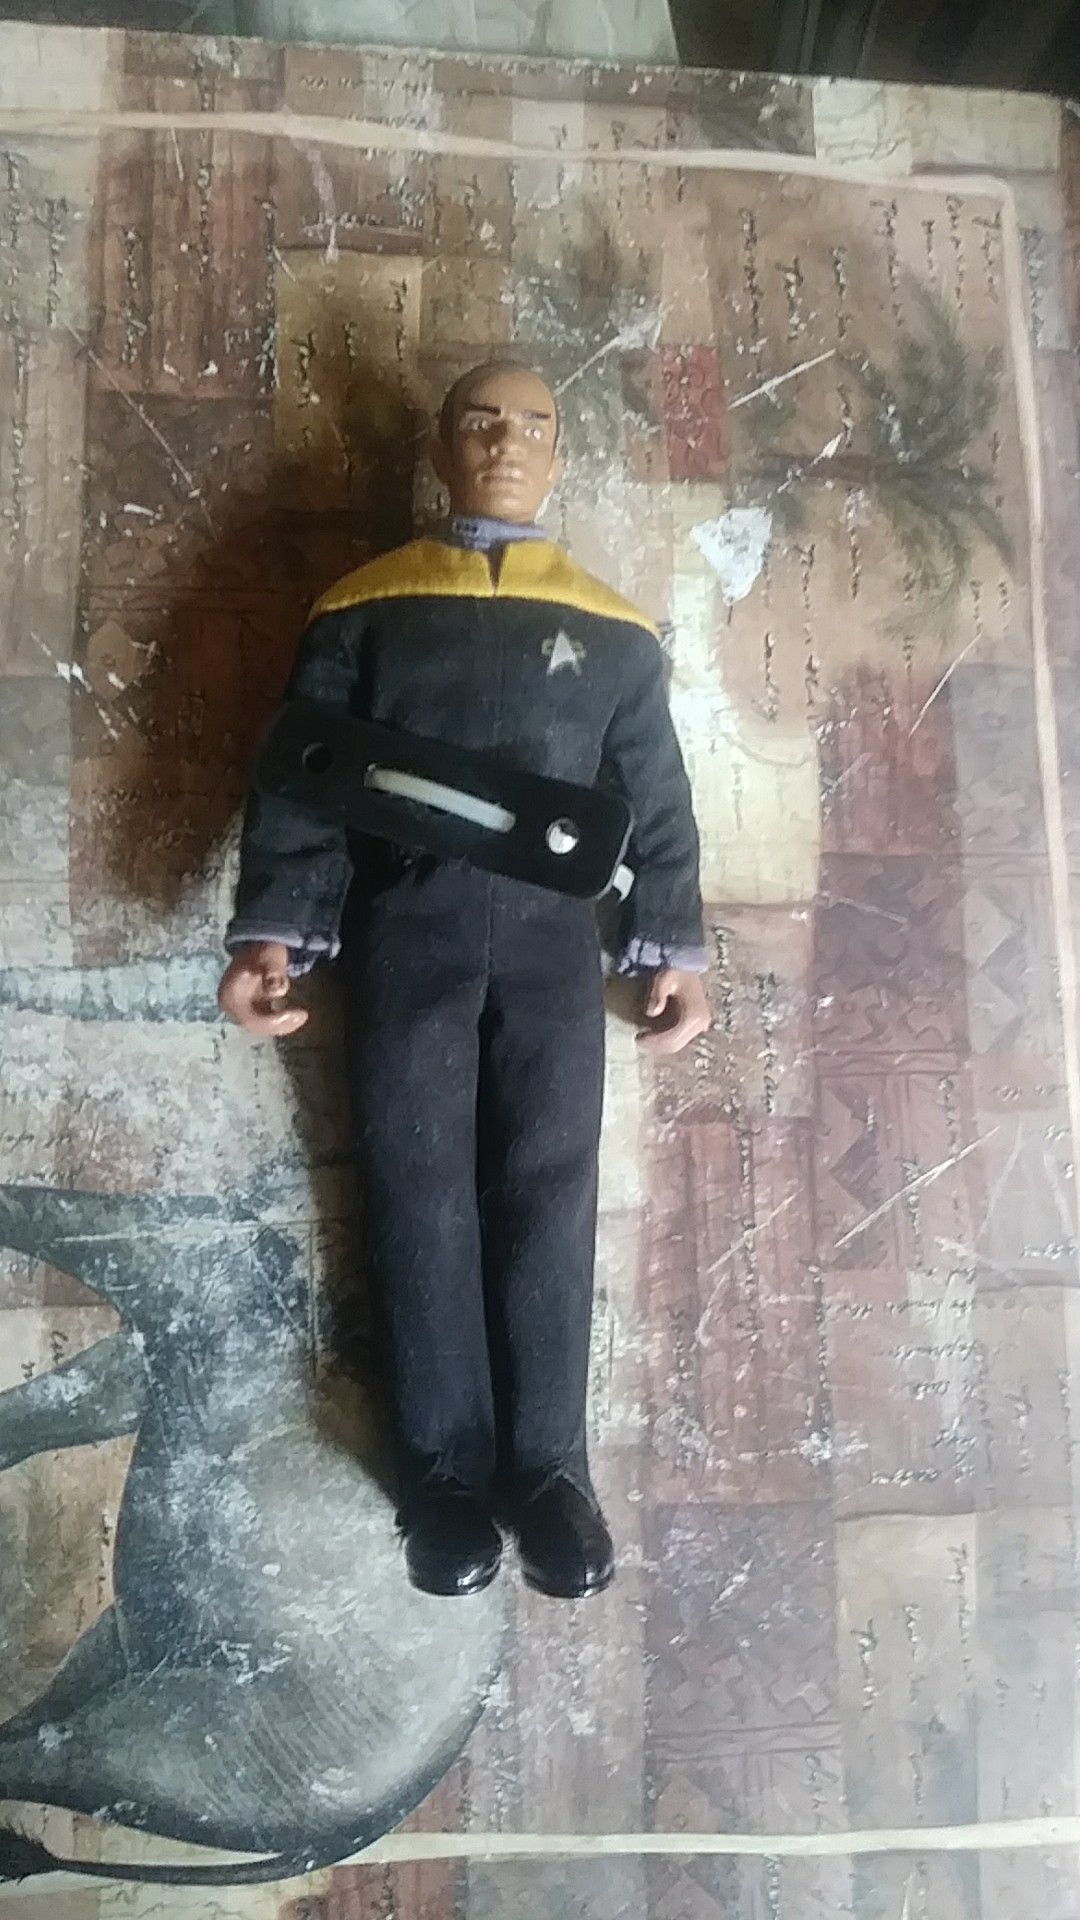 Star Trek Voyager character 1997 playmate